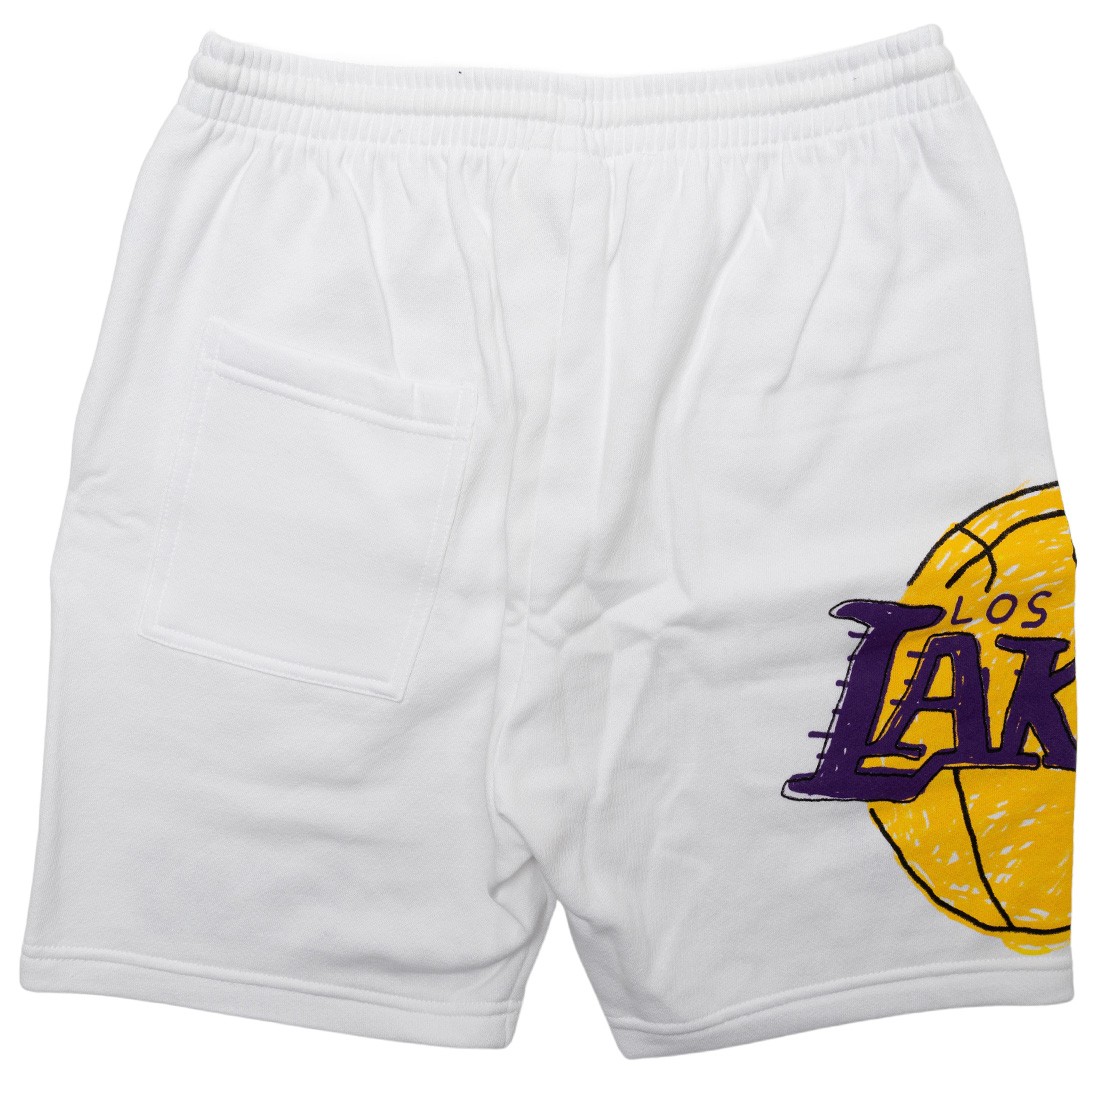 lakers shorts for men